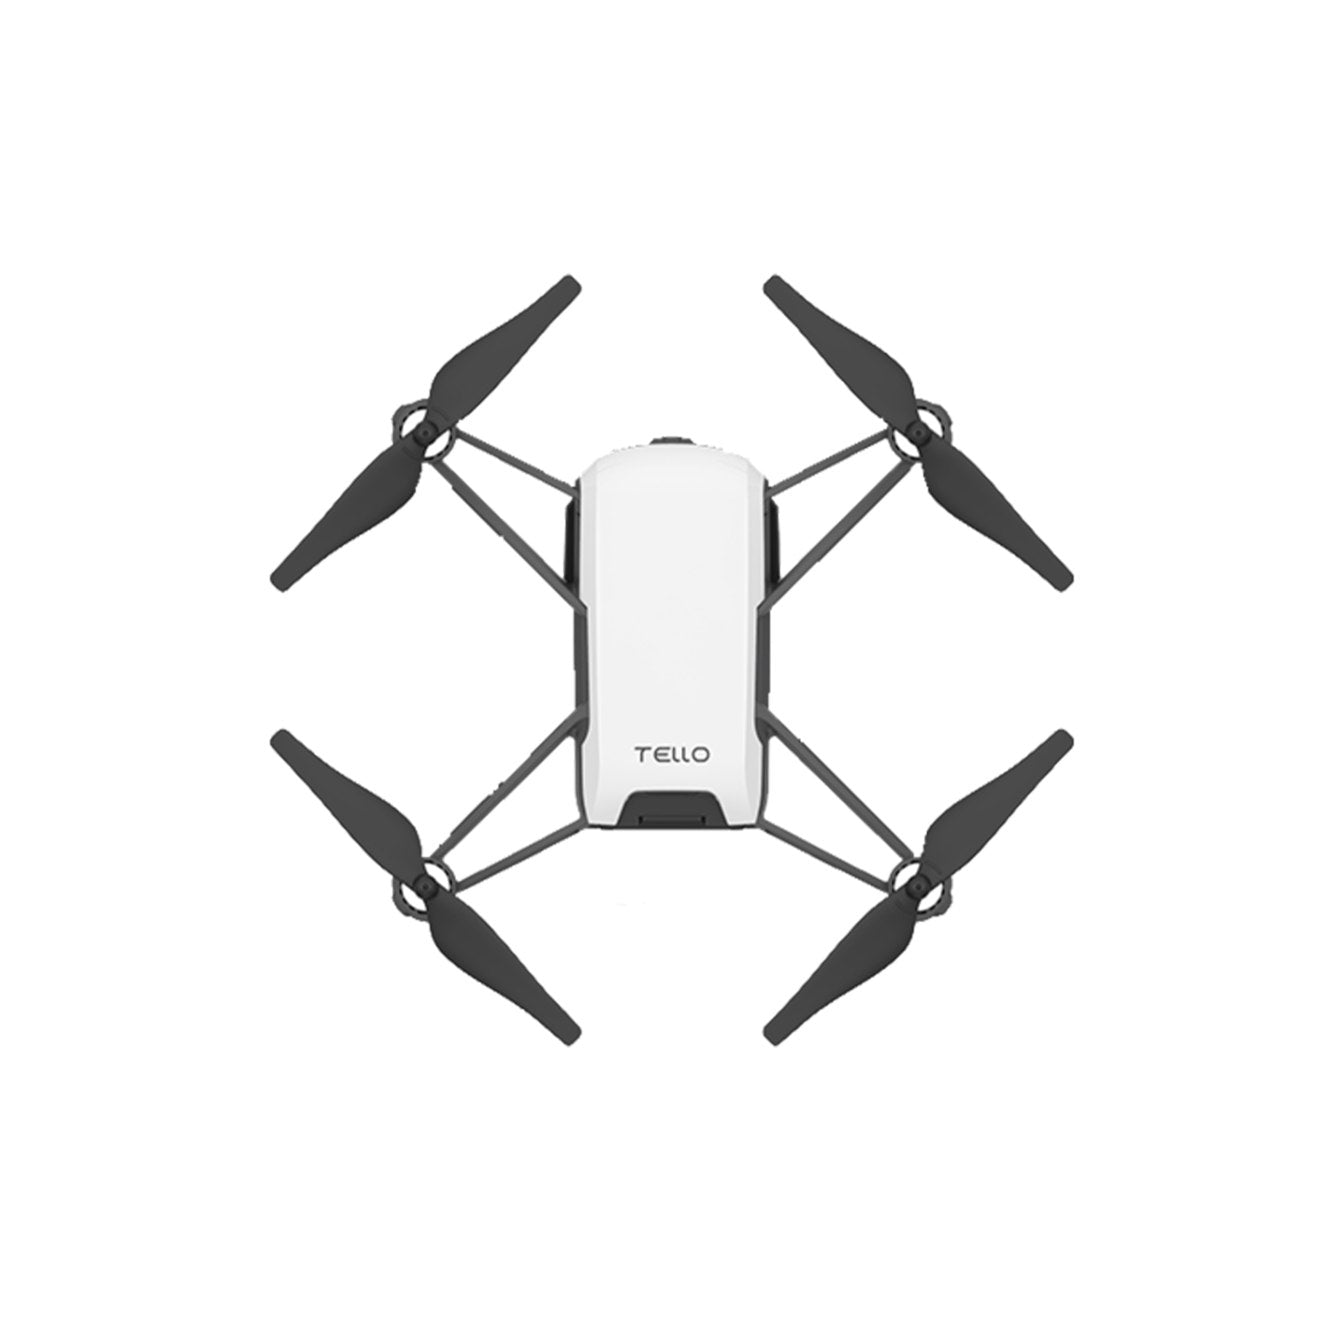 Tello intelligens mini drón (2 év garanciával) (Tello)-0